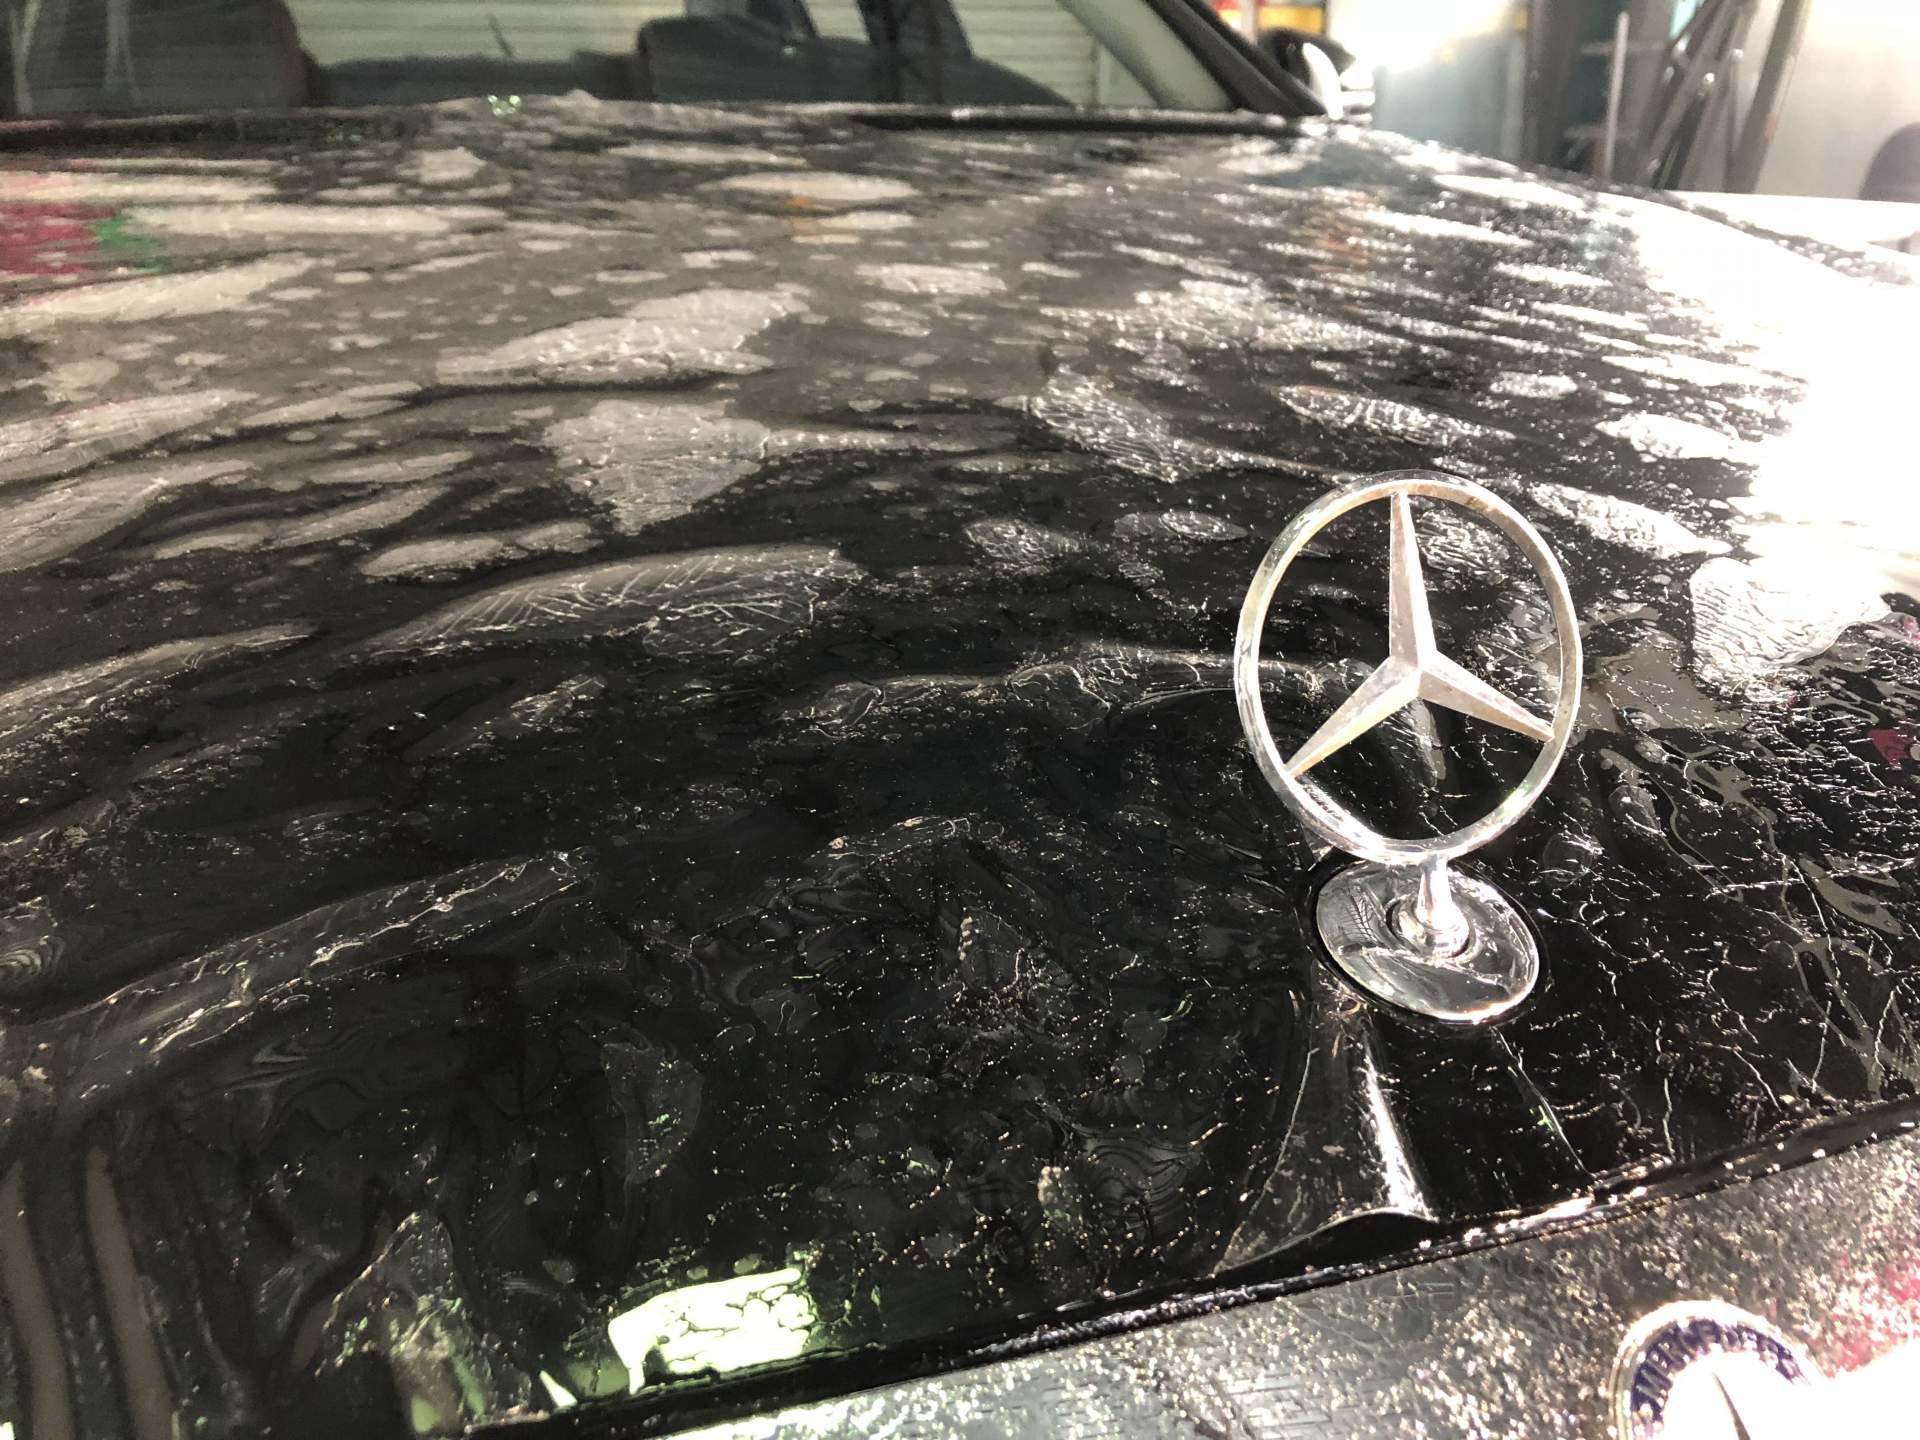 Black Mercedes hood covered in plastic